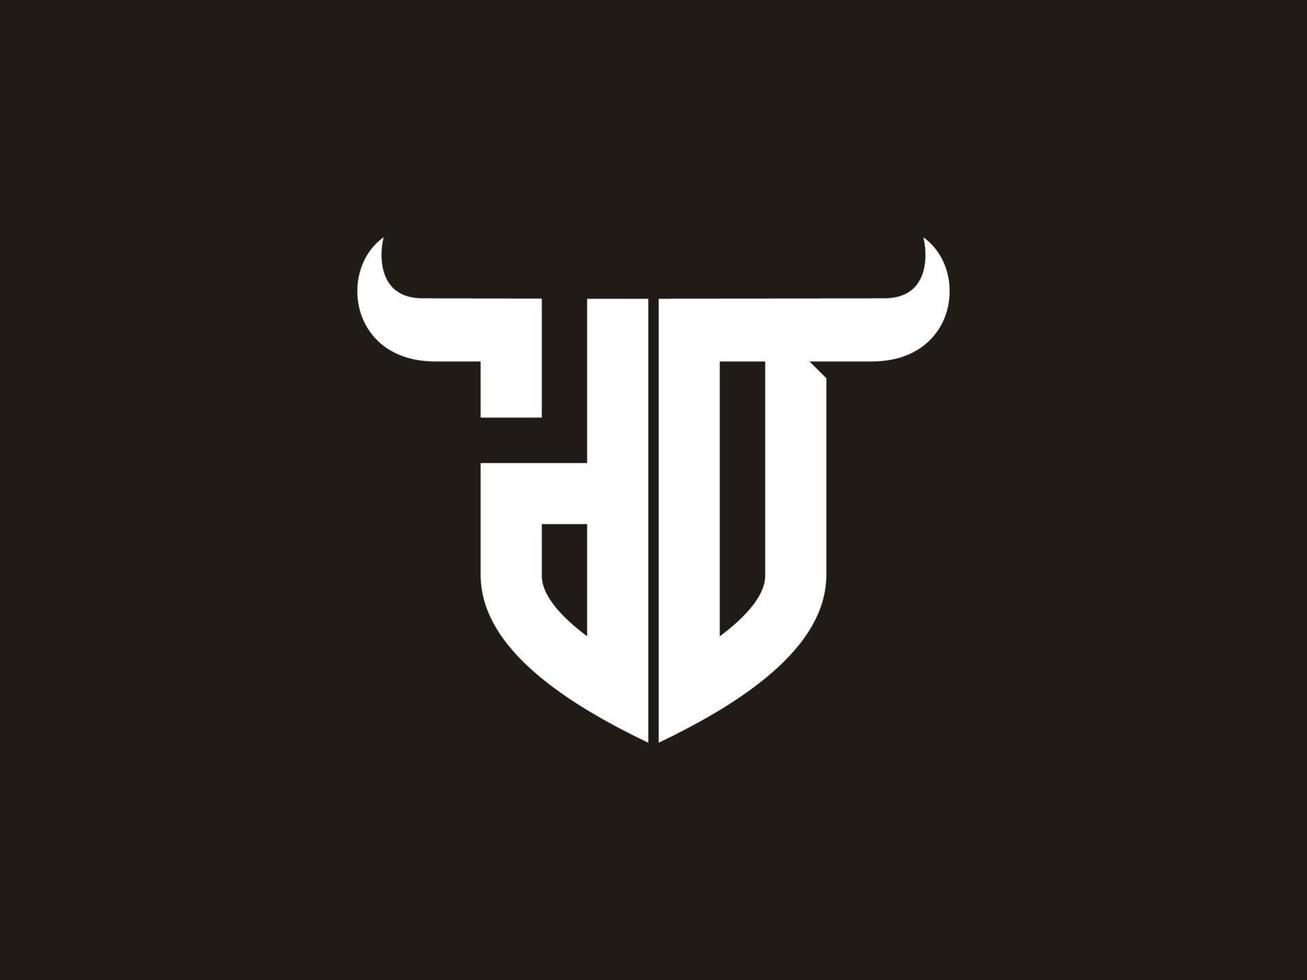 anfängliches dd-bull-logo-design. vektor